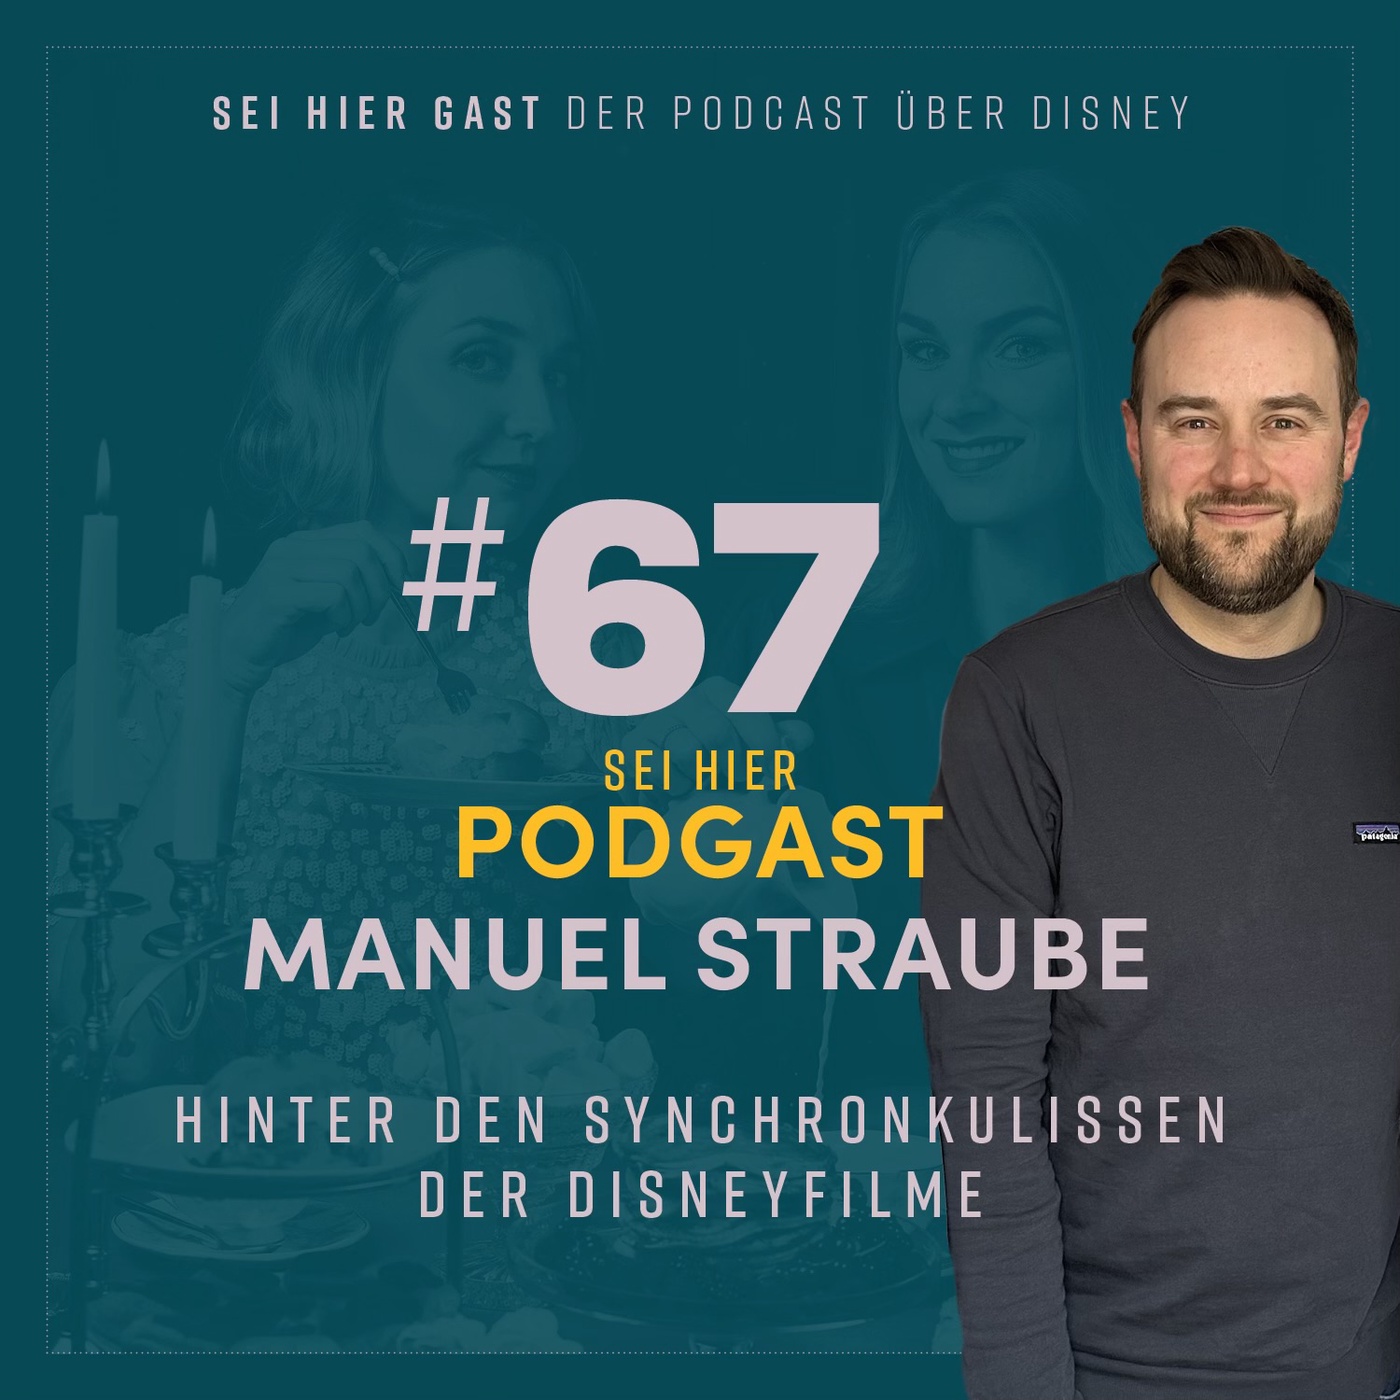 # 67 PodGast Manuel Straube I Hinter den Synchronkulissen der Disneyfilme